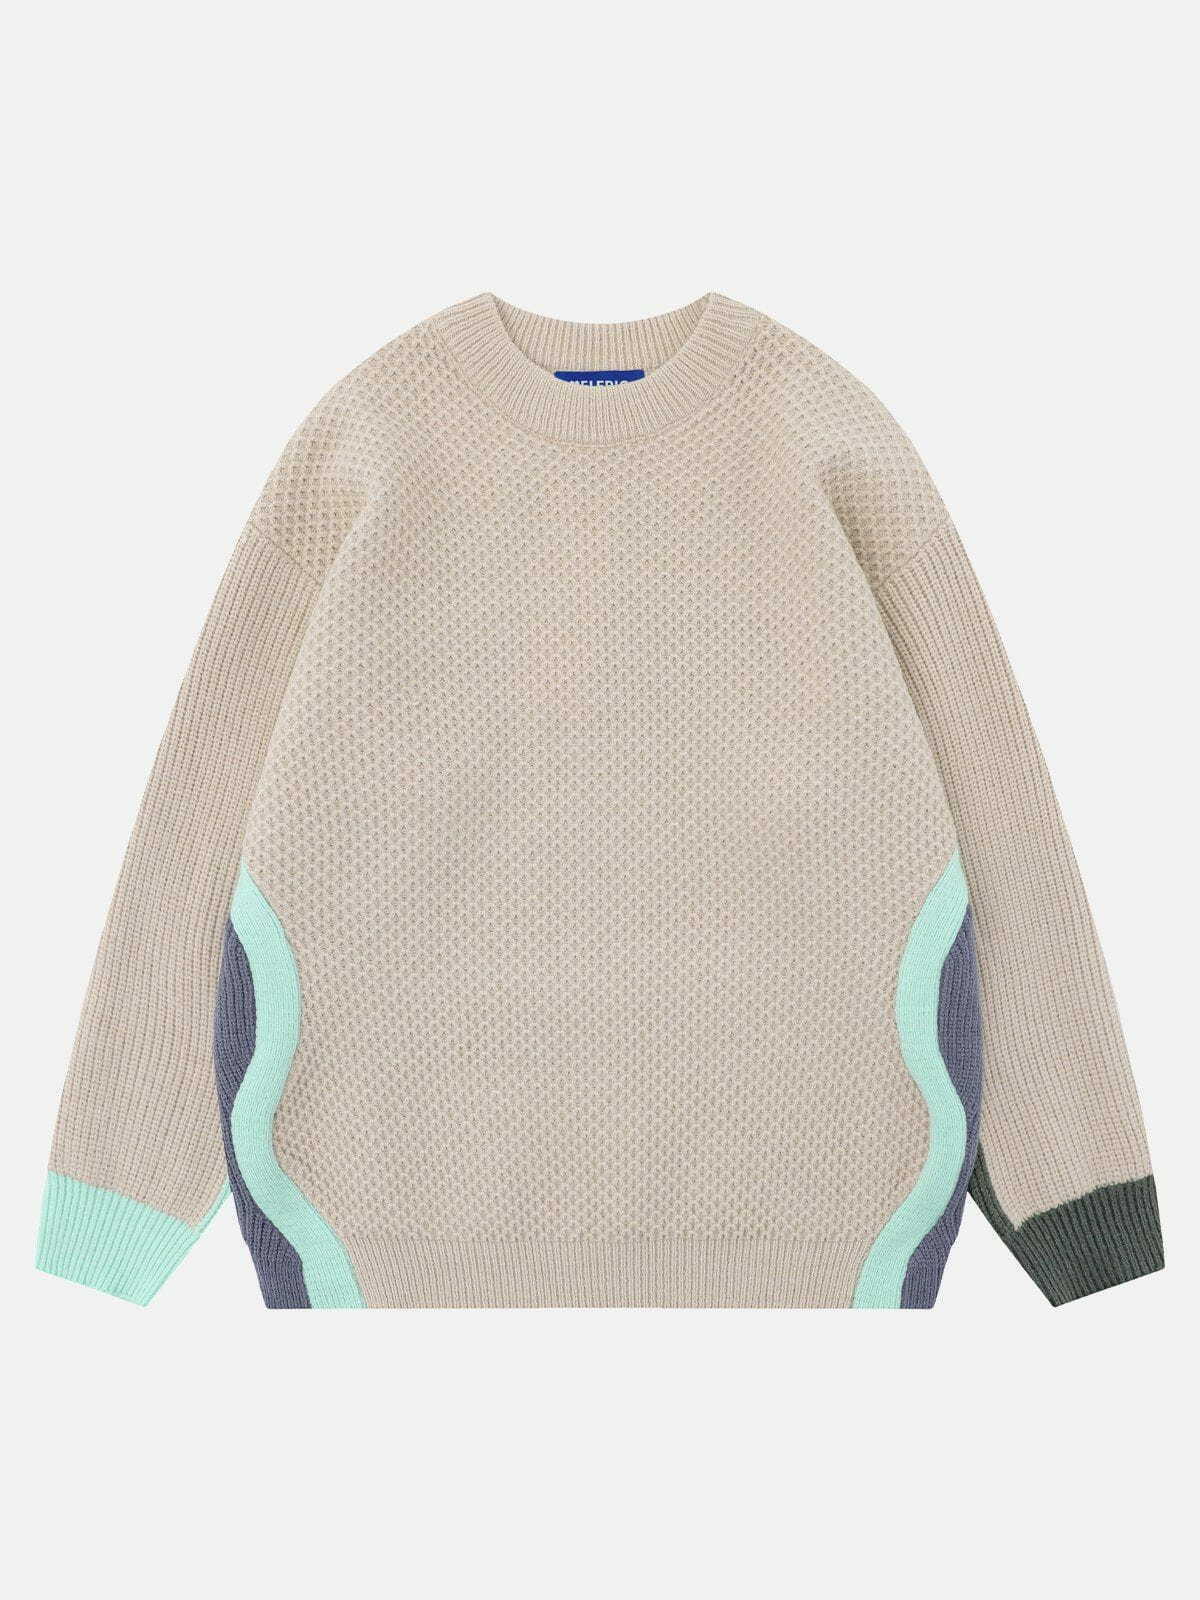 chic minimalism color block sweater   urban y2k style 6111